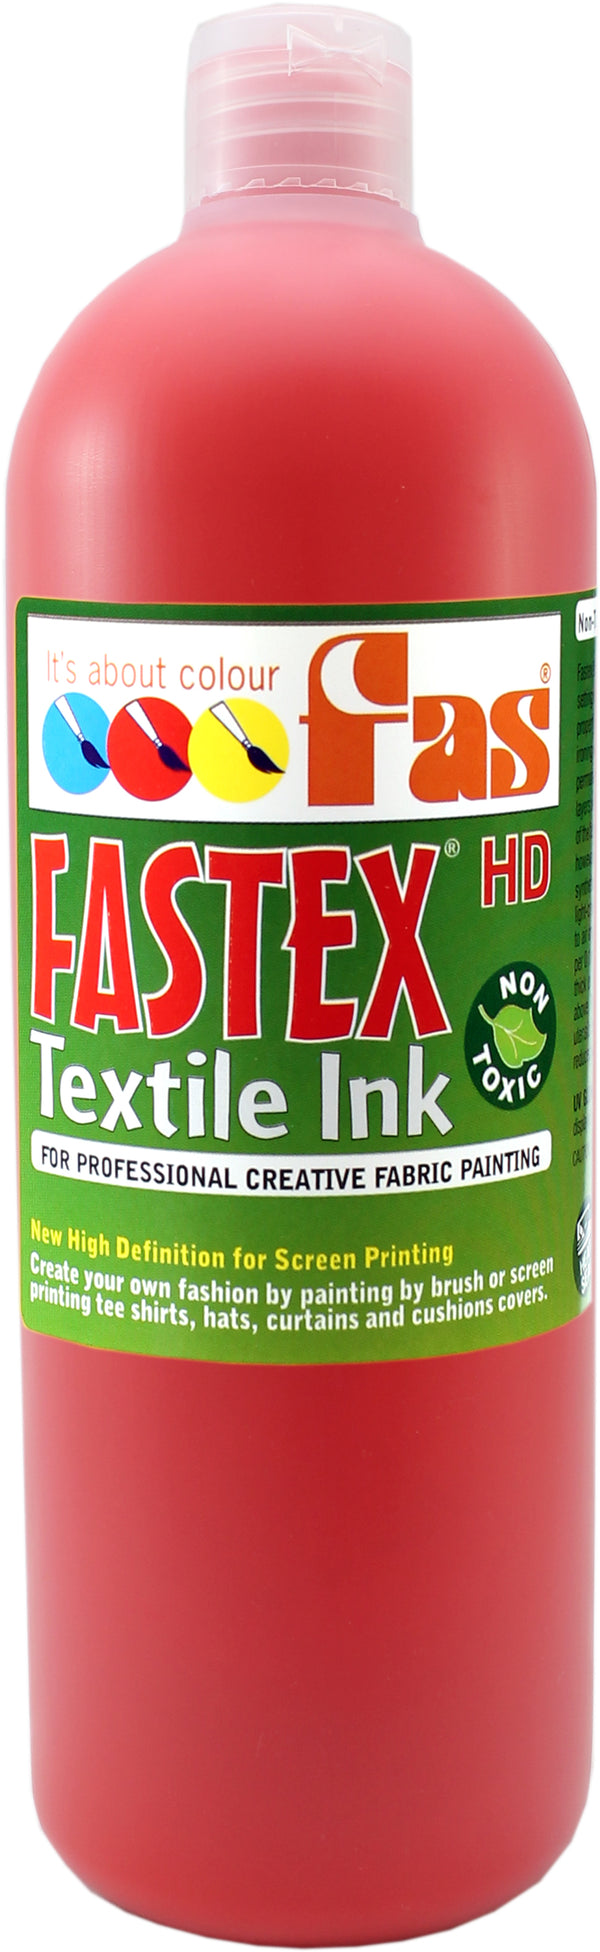 Fas Textile Fabric Ink 1 Litre#Colour_BRILLIANT RED